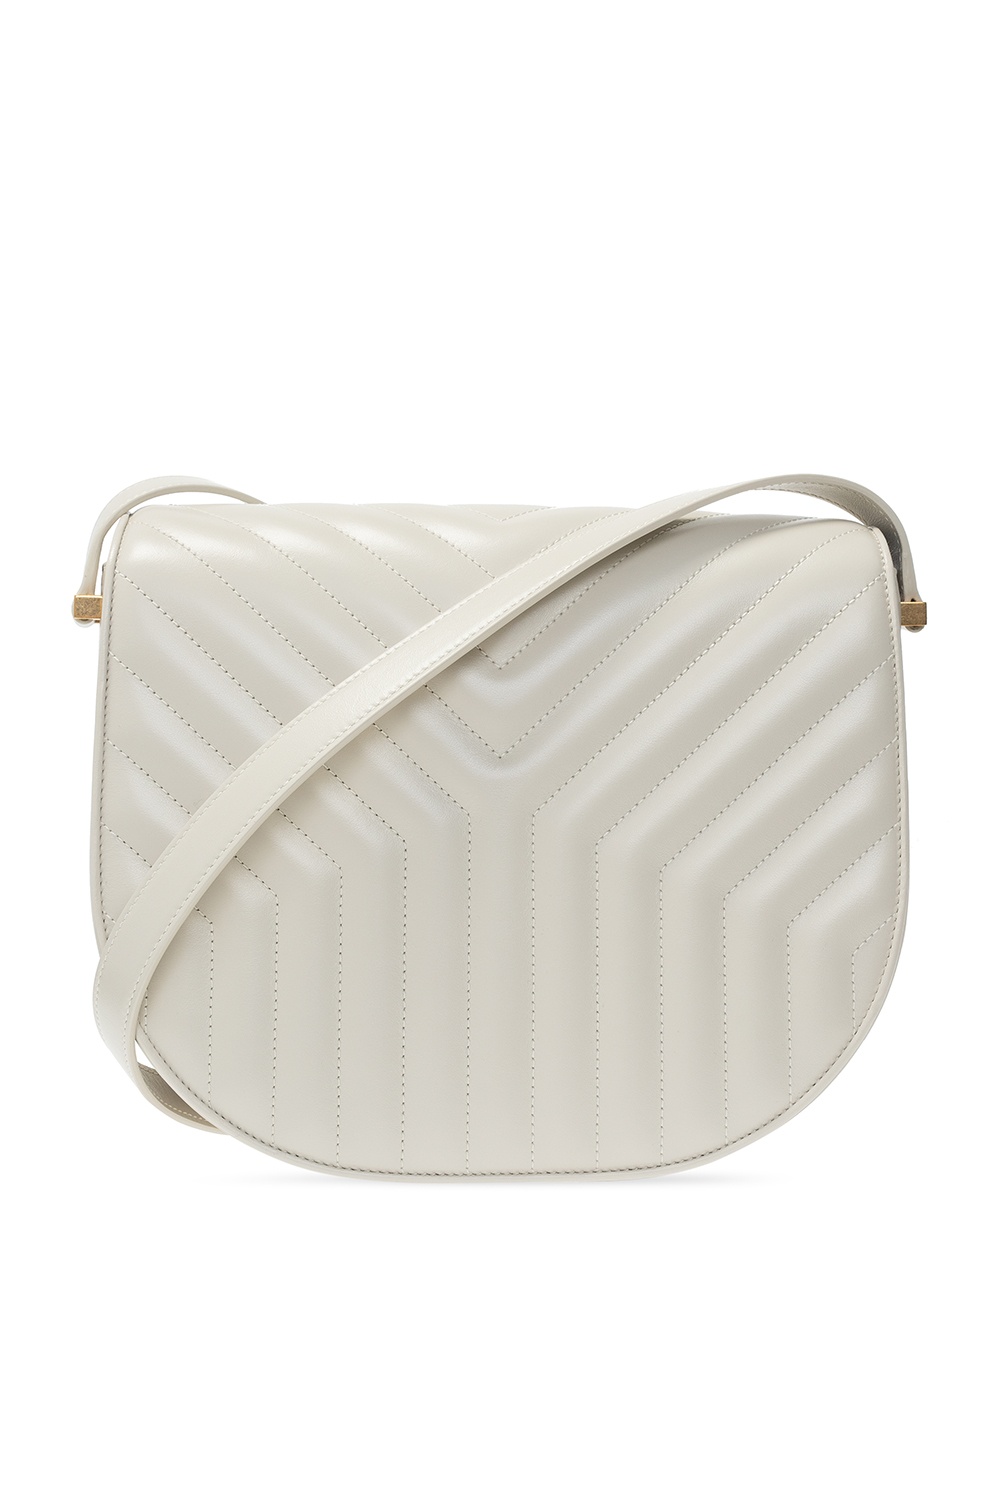 Saint Laurent ‘Joan’ shoulder bag